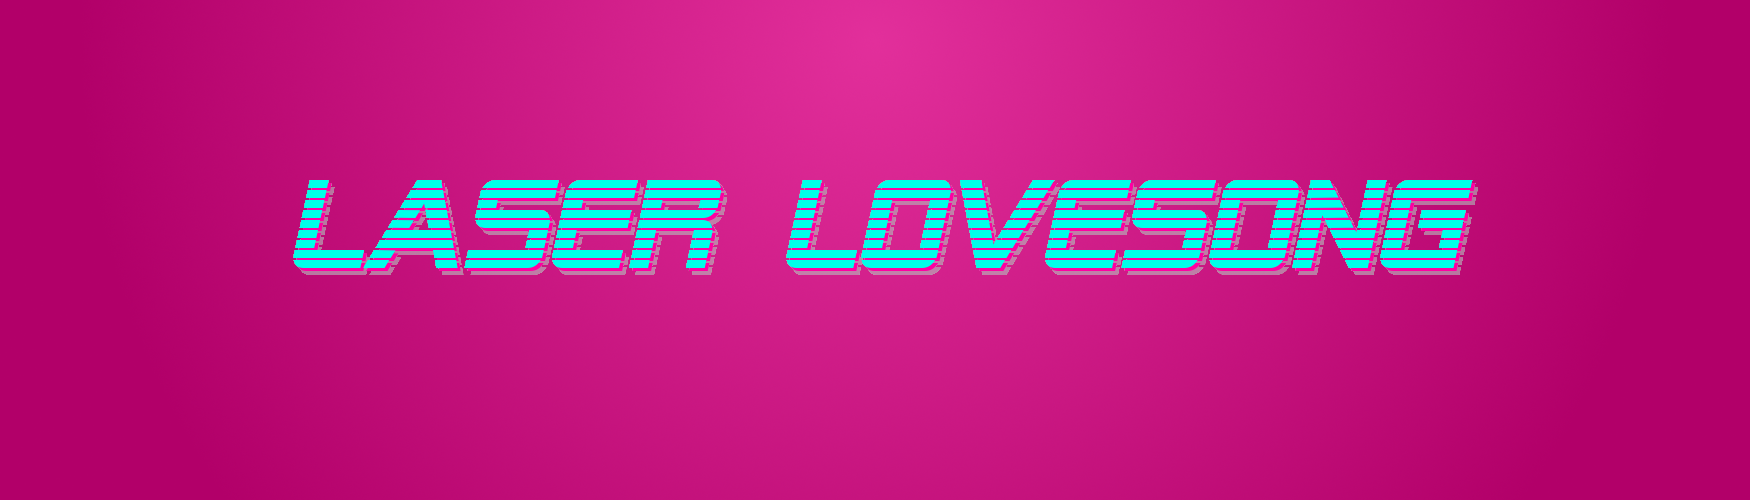 Laser Lovesong